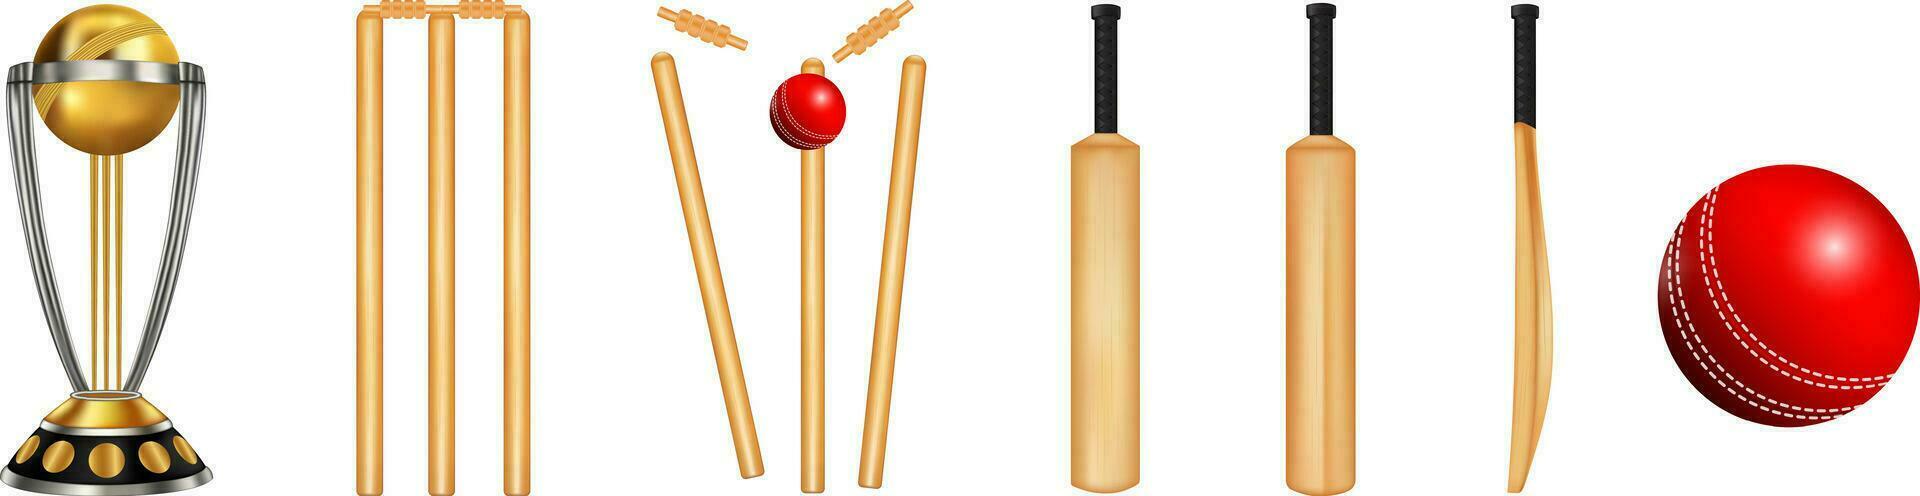 Cricket Batsman, Bowler Silhouettes Elements vector